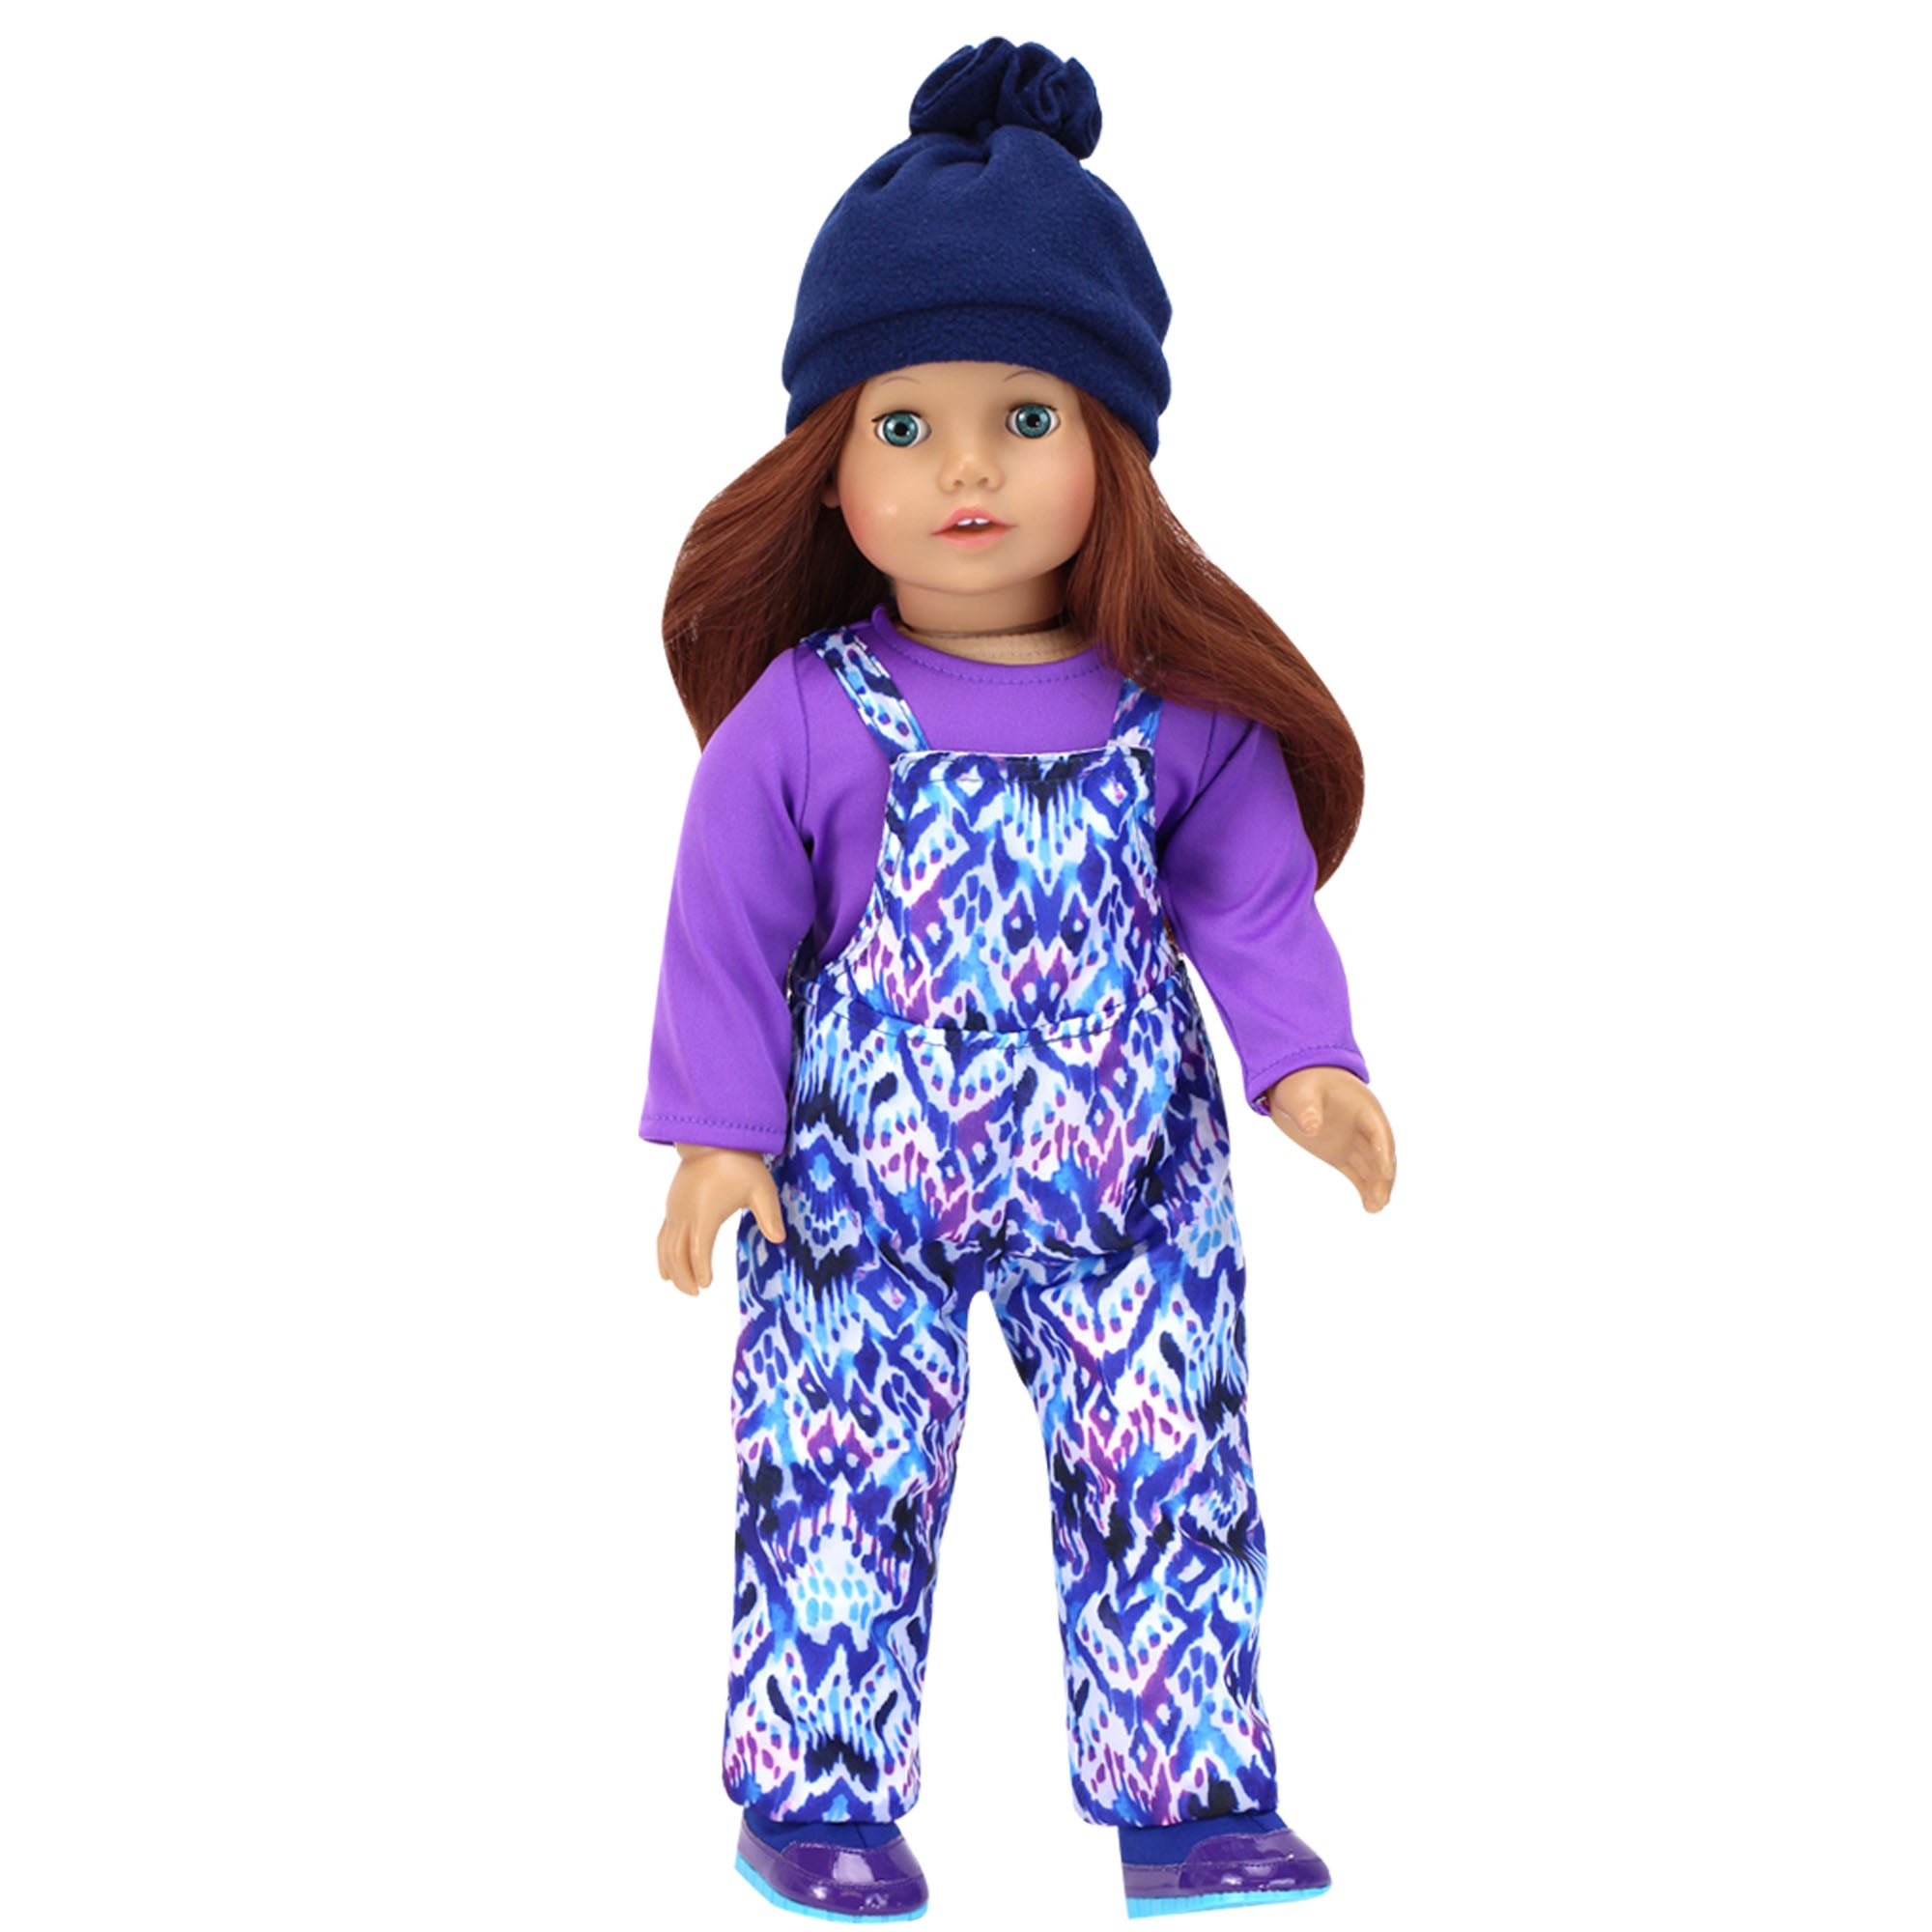 Sophia's - 18" Doll - Ikat Print Bib Snow Overalls, Purple T, Navy Fleece Hat & Boots Set - Blue